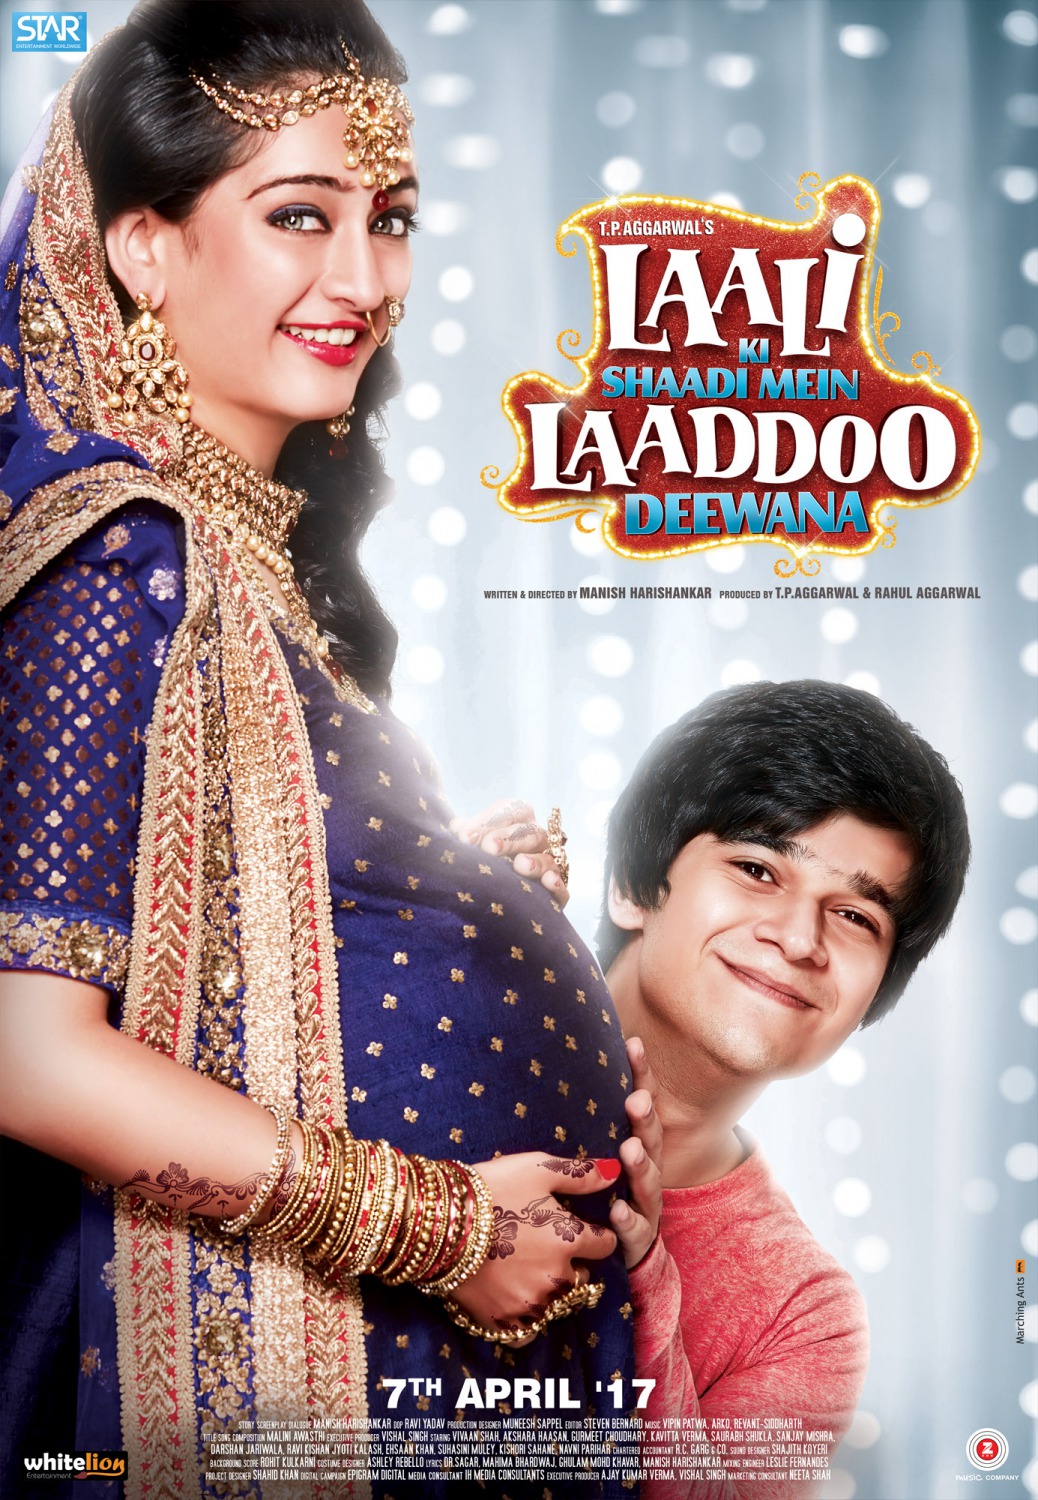 Extra Large Movie Poster Image for Laali Ki Shaadi Mein Laaddoo Deewana (#2 of 3)